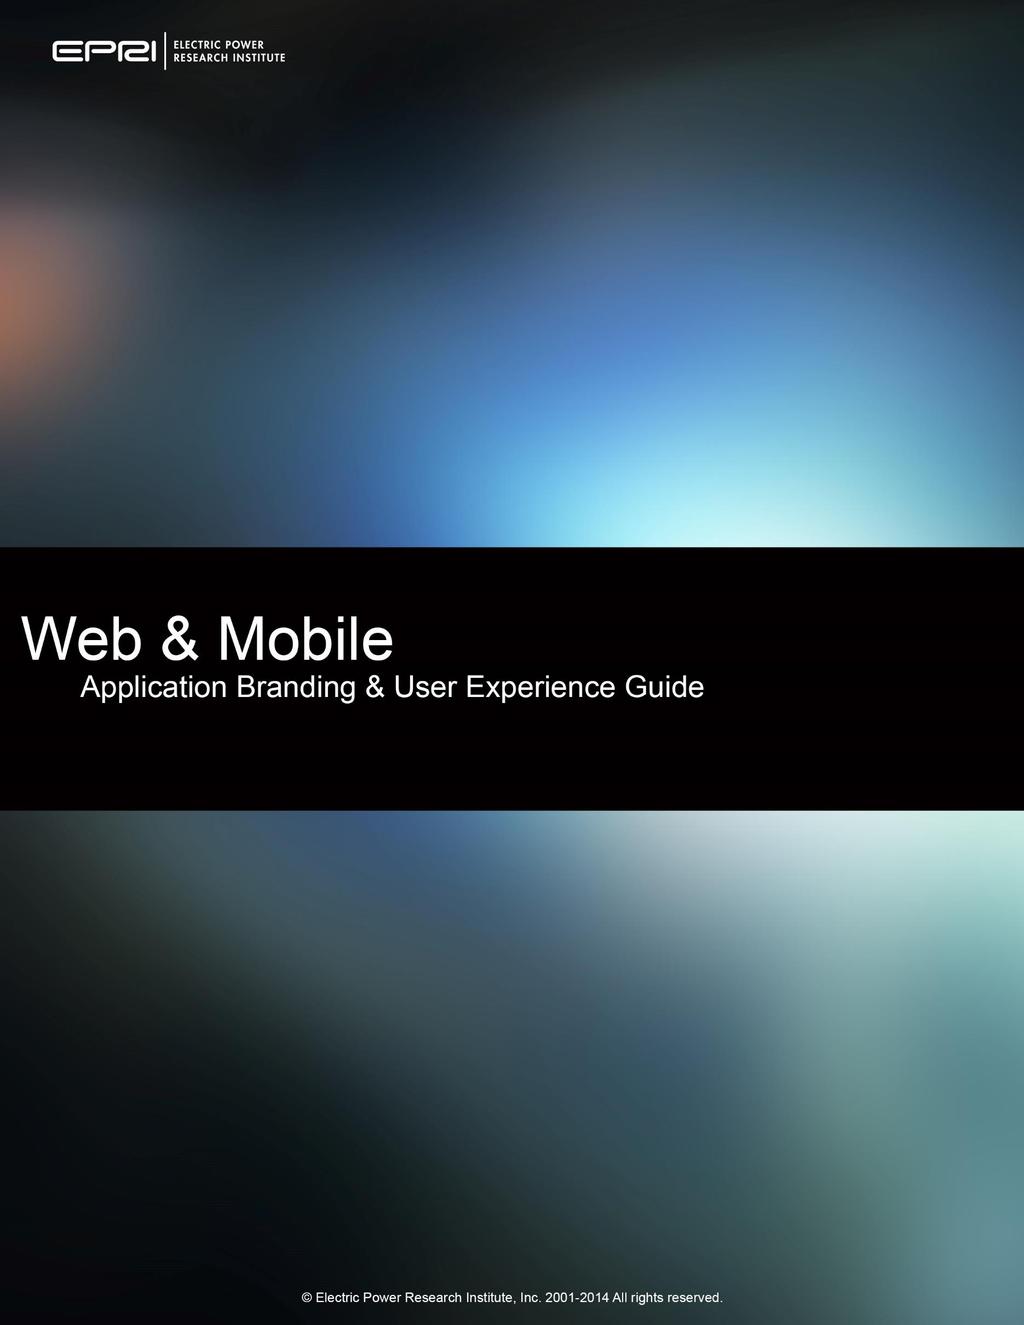 Web & Mobile Application Branding